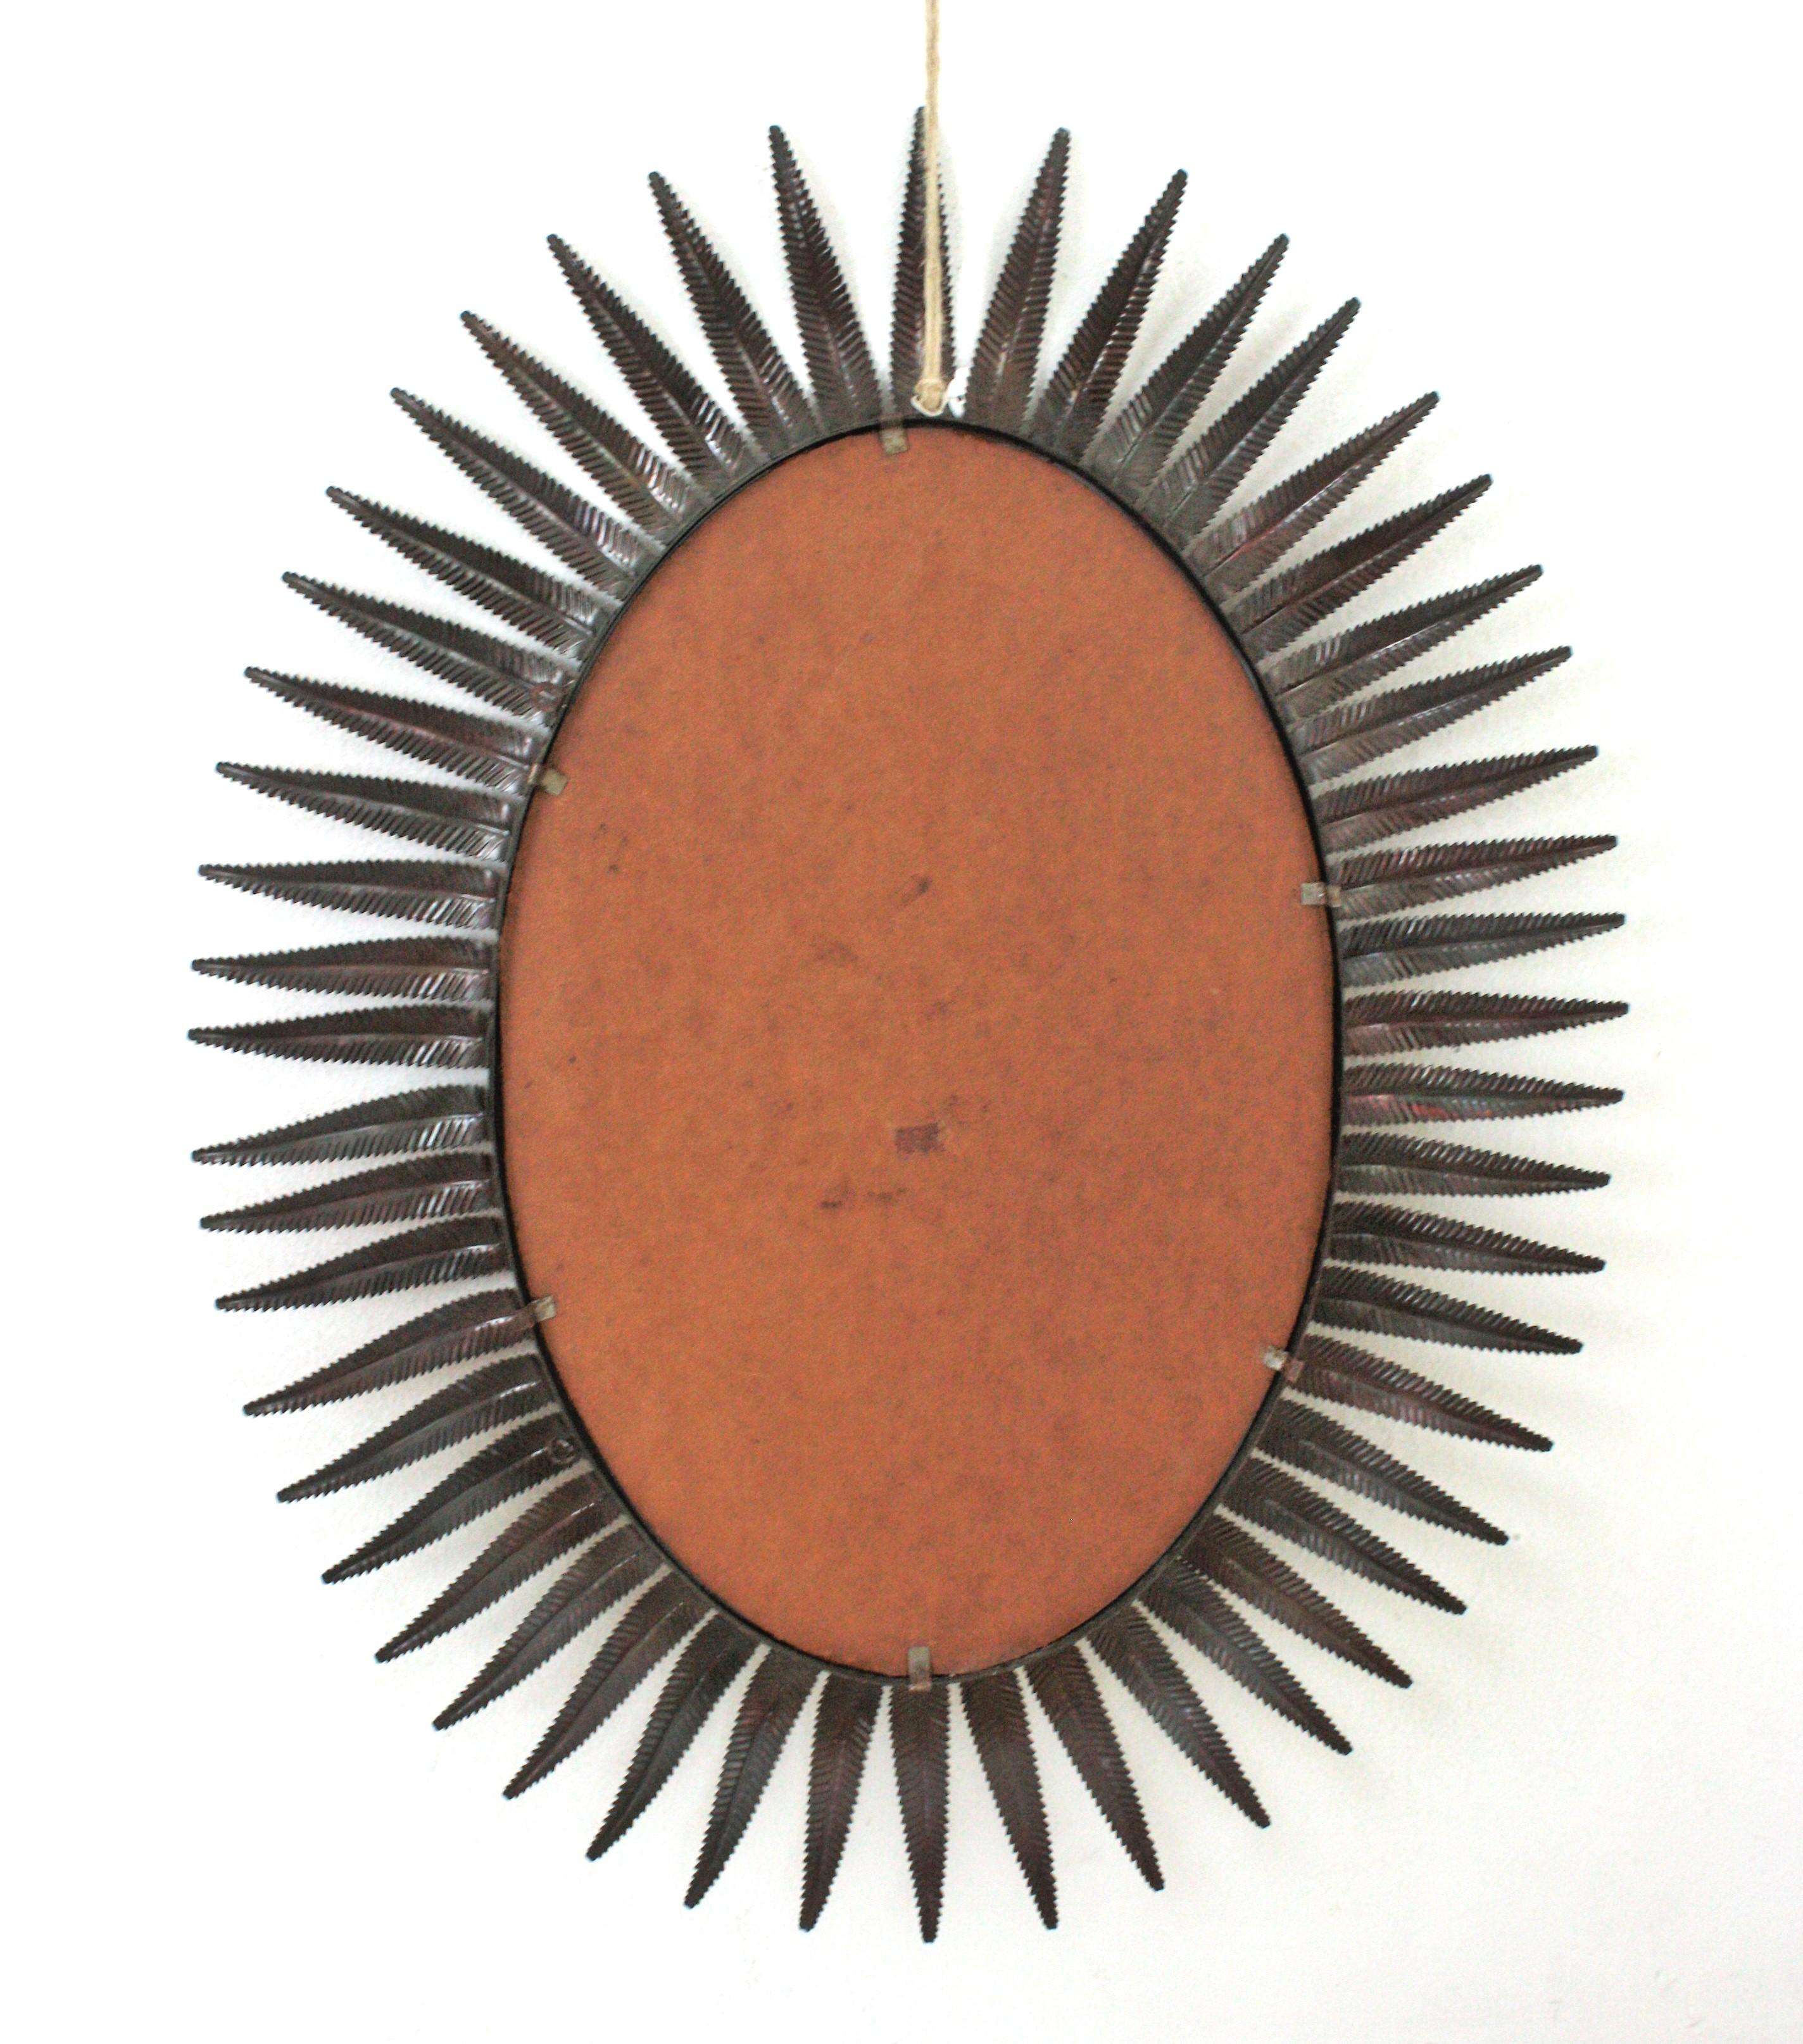 Spanish Sunburst Oval Mirror in Copper Metal, 1950s For Sale 6